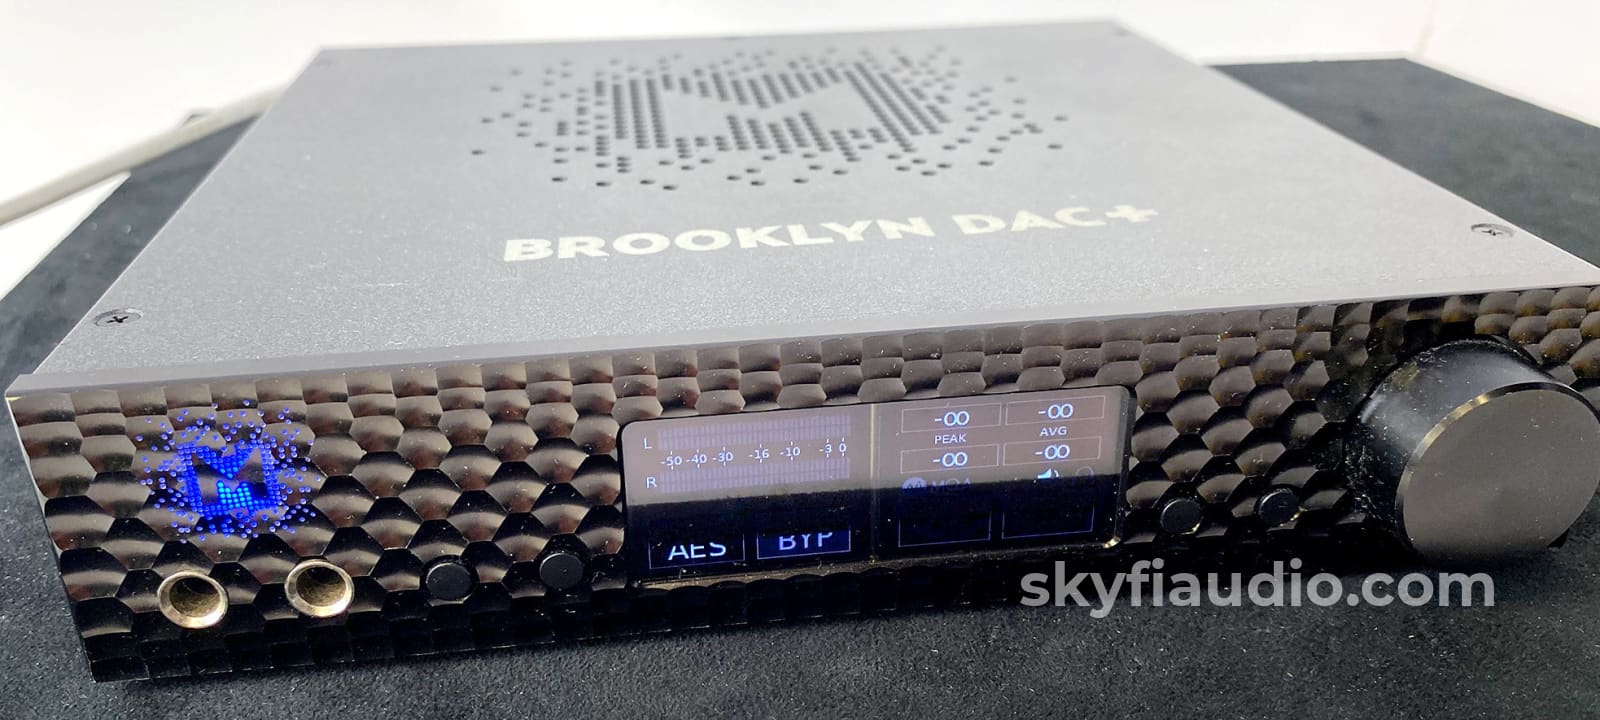 Mytek Brooklyn Dac+ Stereophile Class A Complete Set Cd + Digital